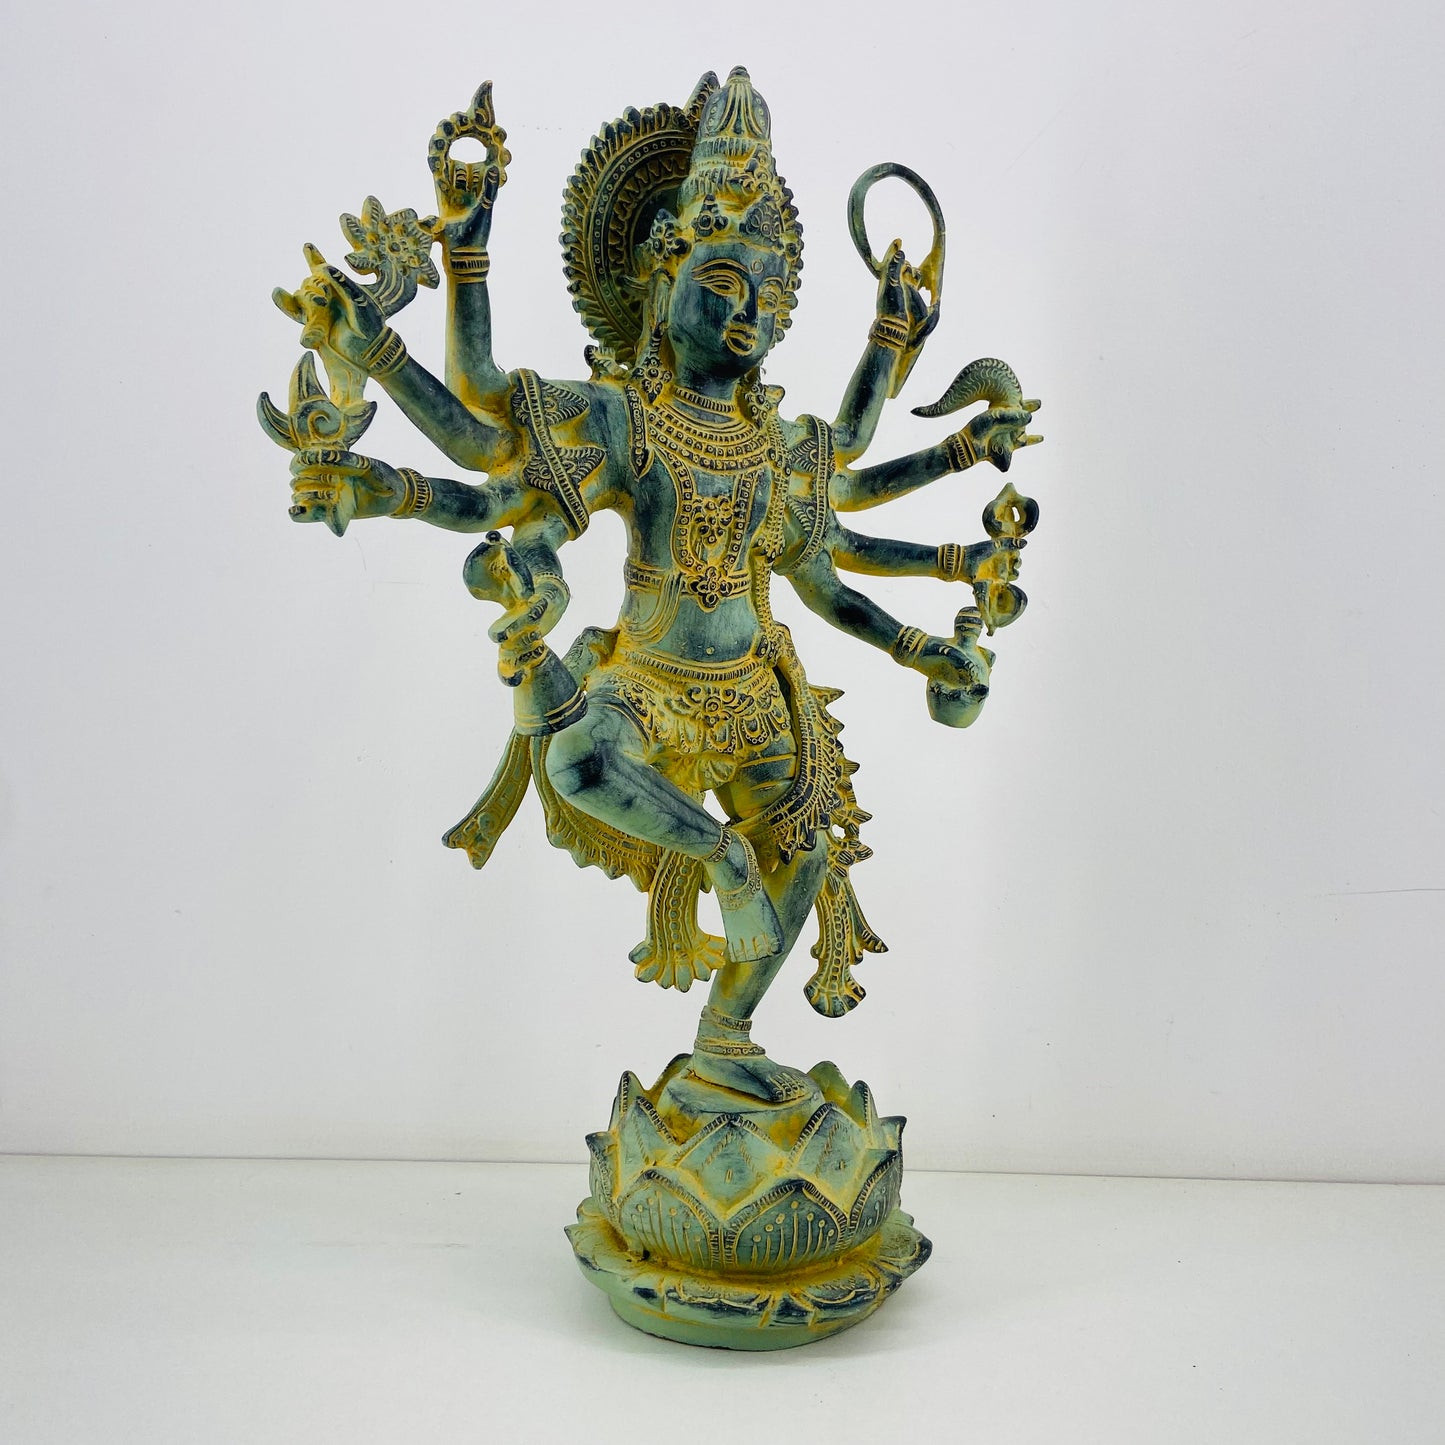 Beautiful Shiva Sculpture made of Brass